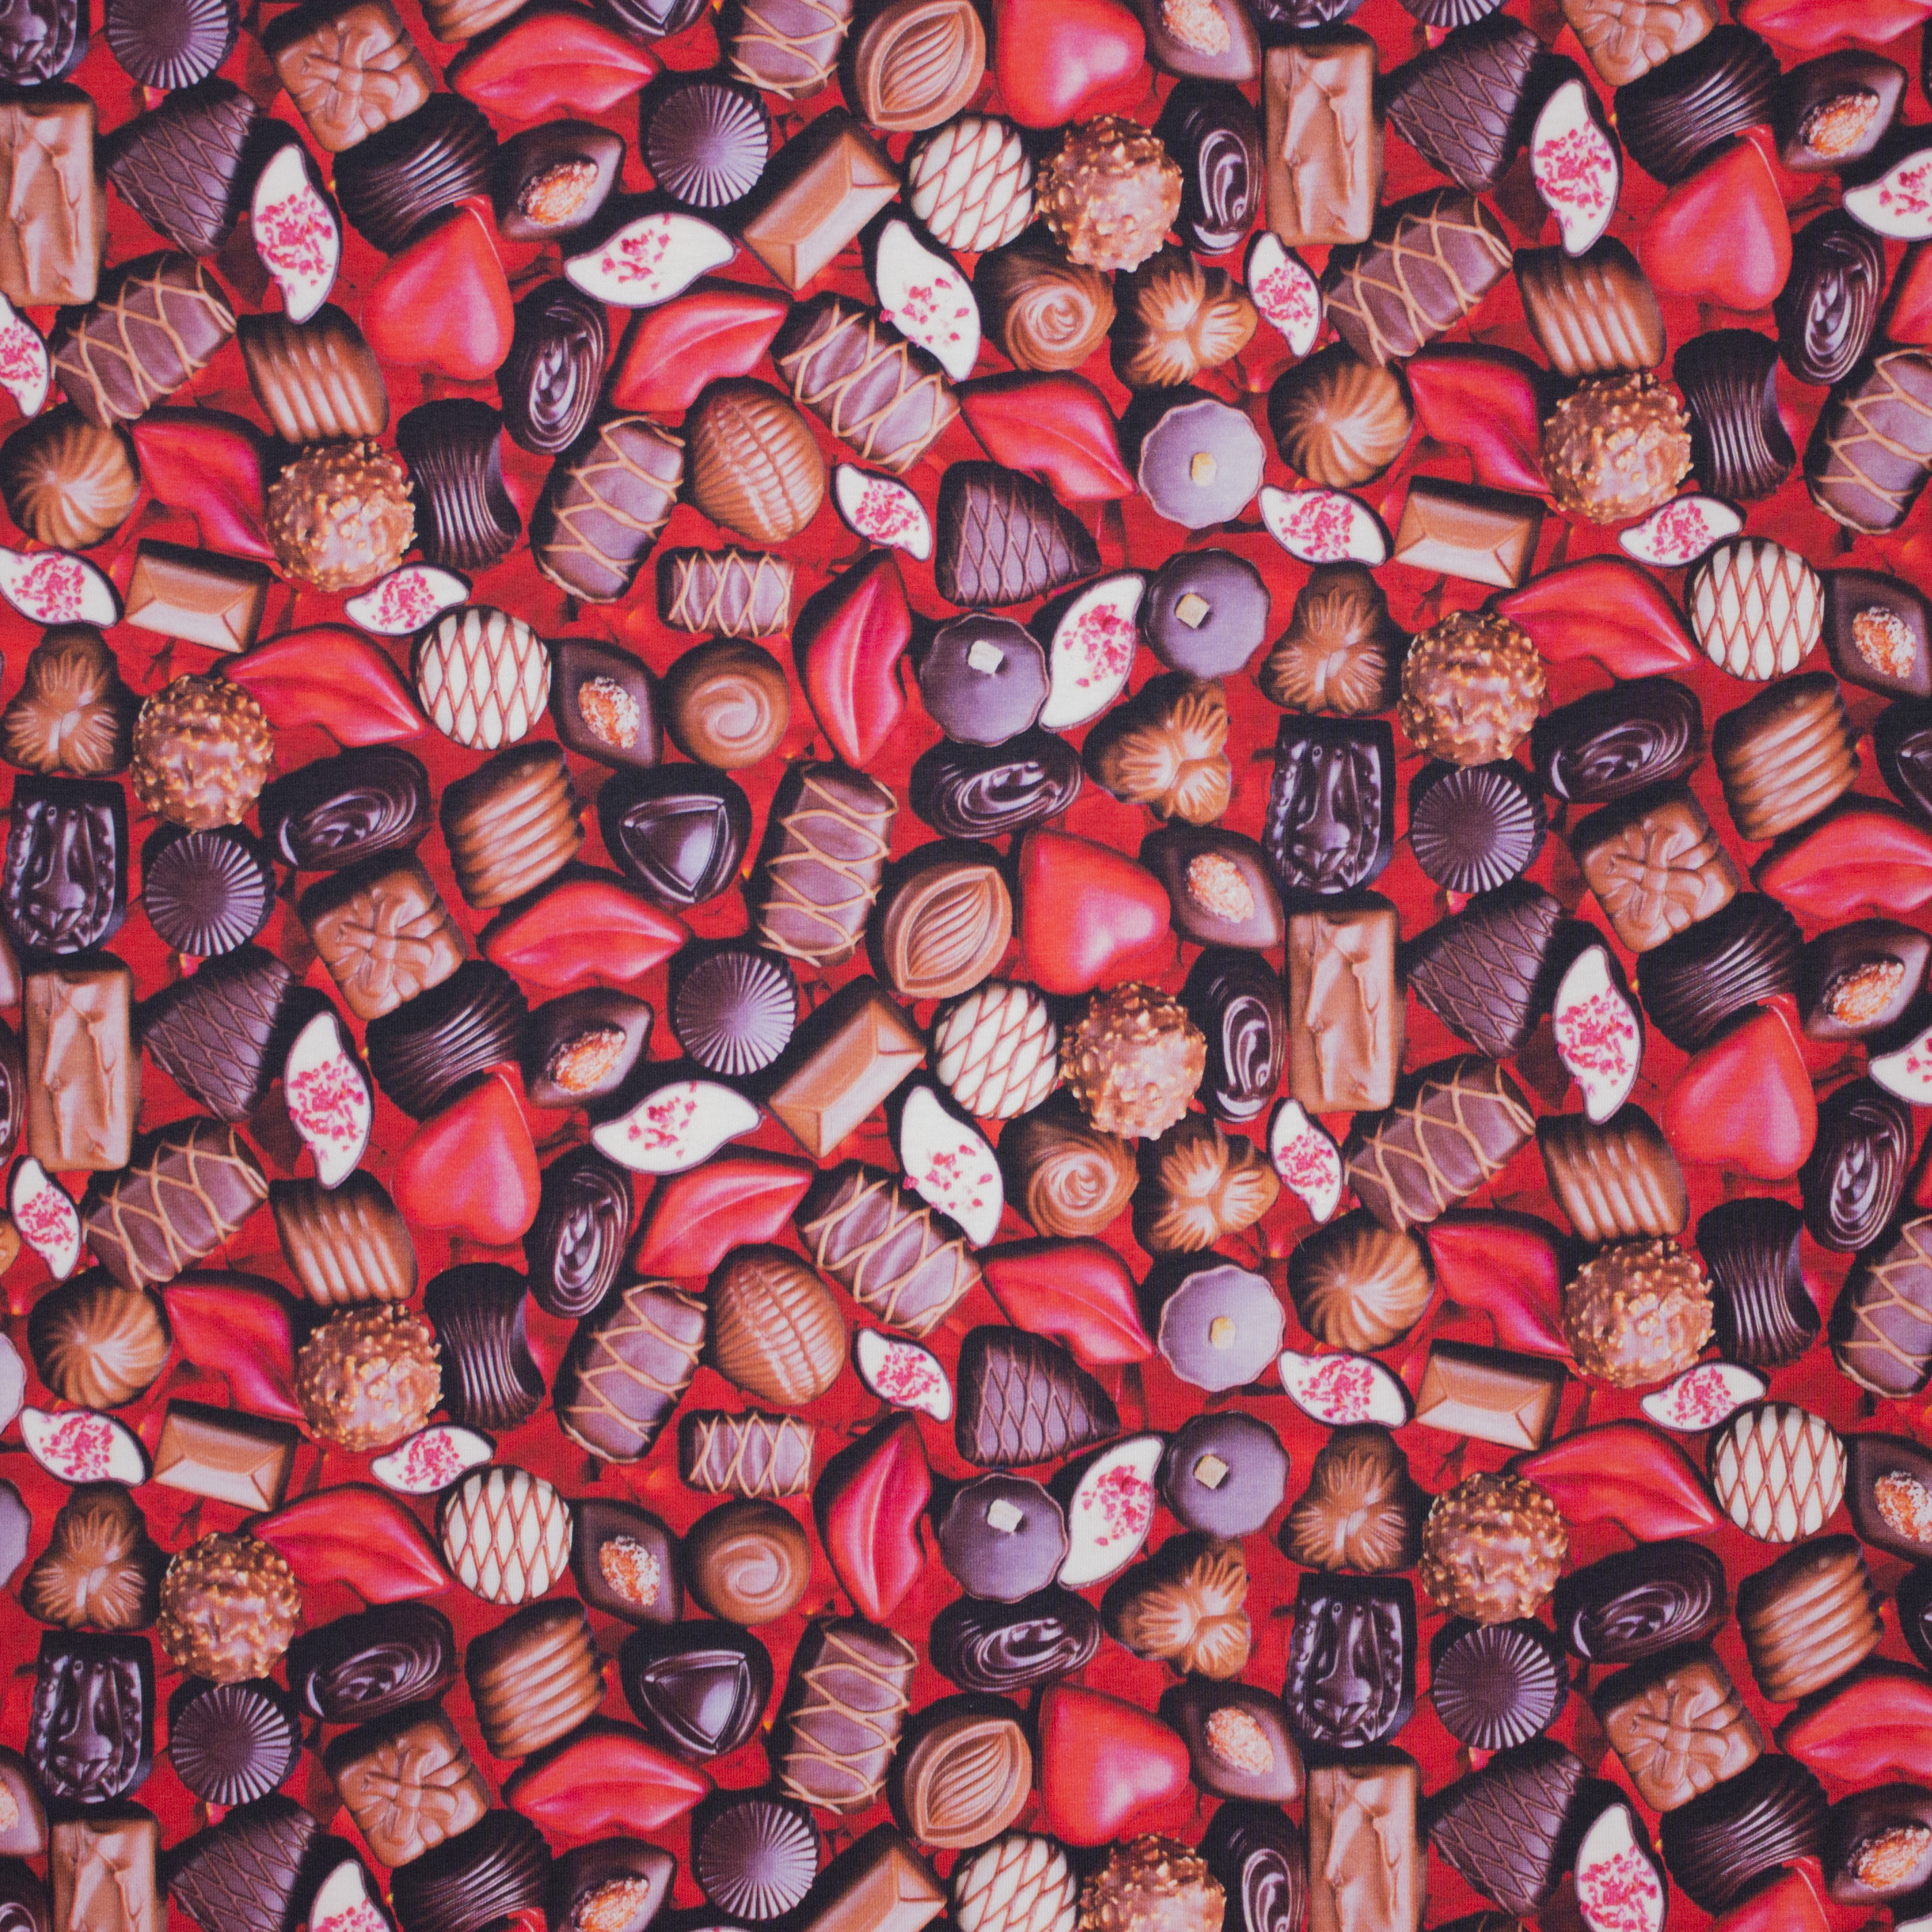 Rode tricot met pralines